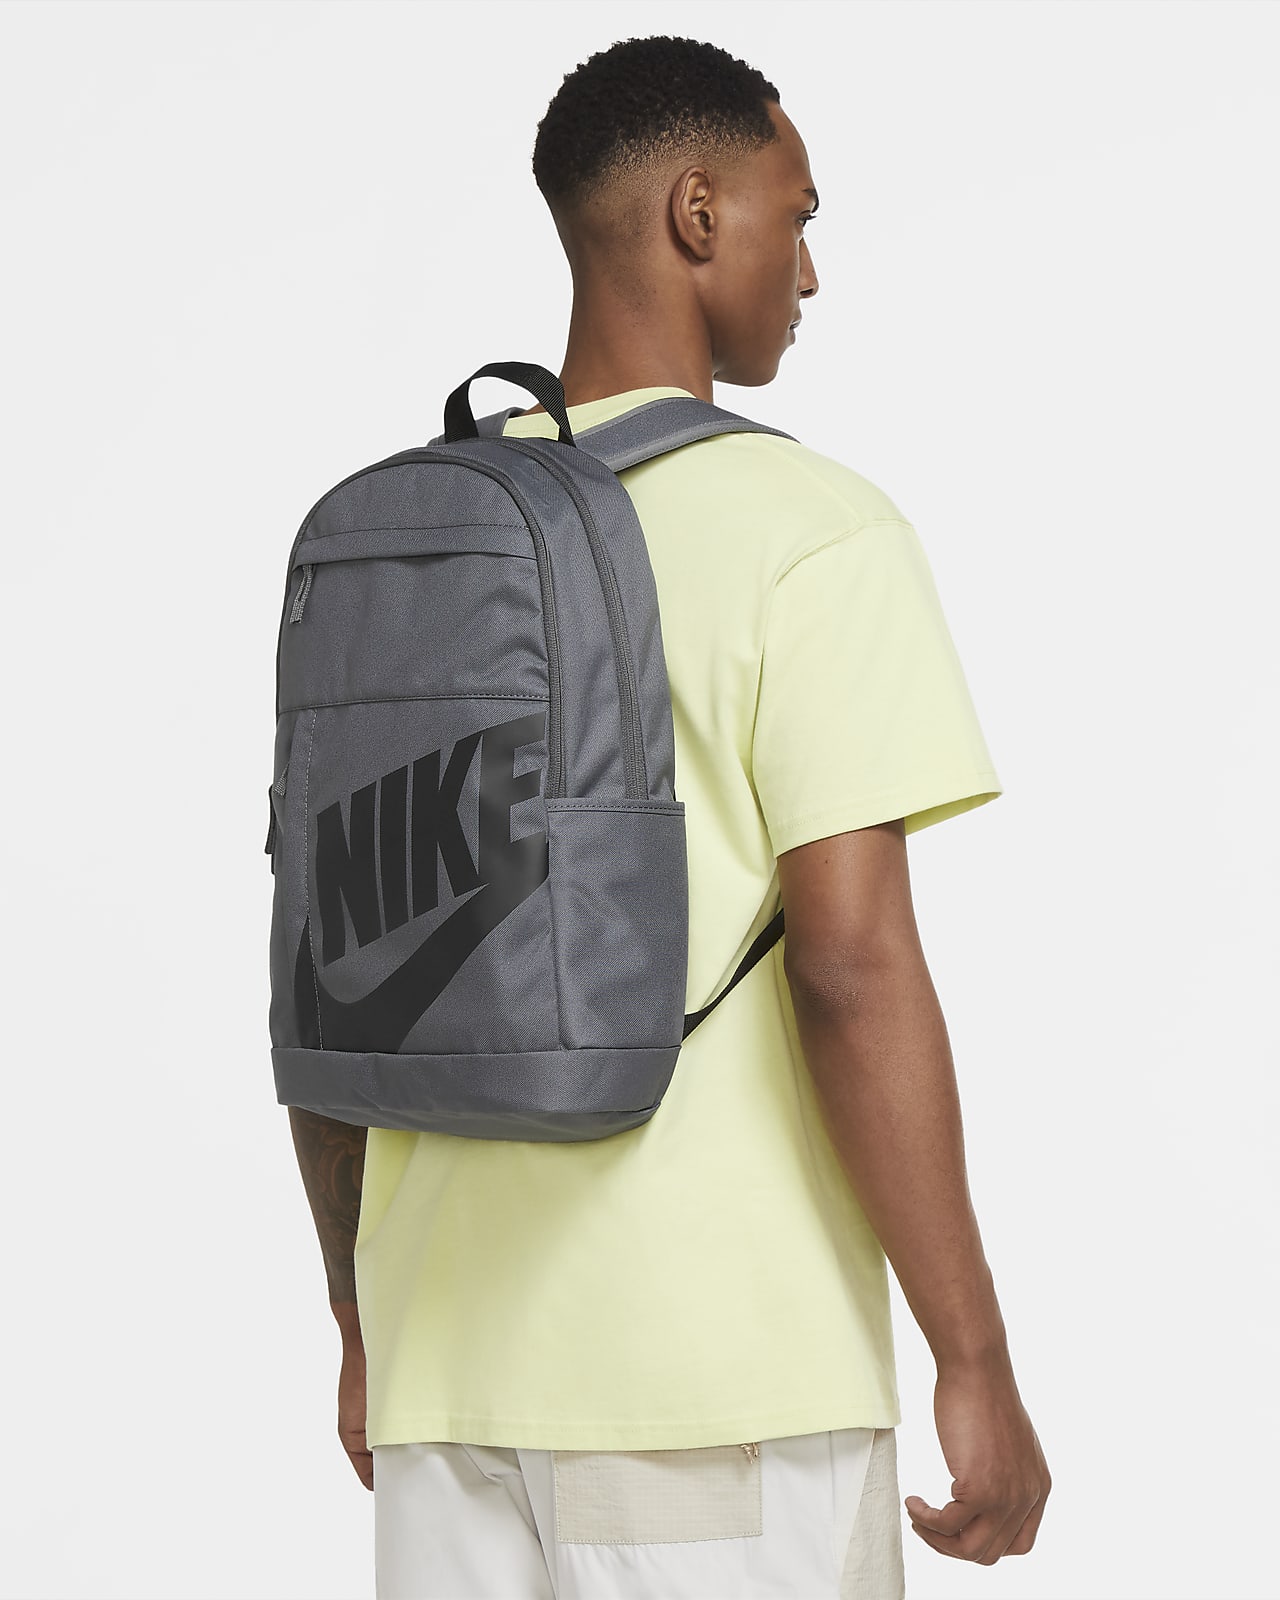 Nike Futura x 3 Brand Daypack - Grey - One Size (21L)